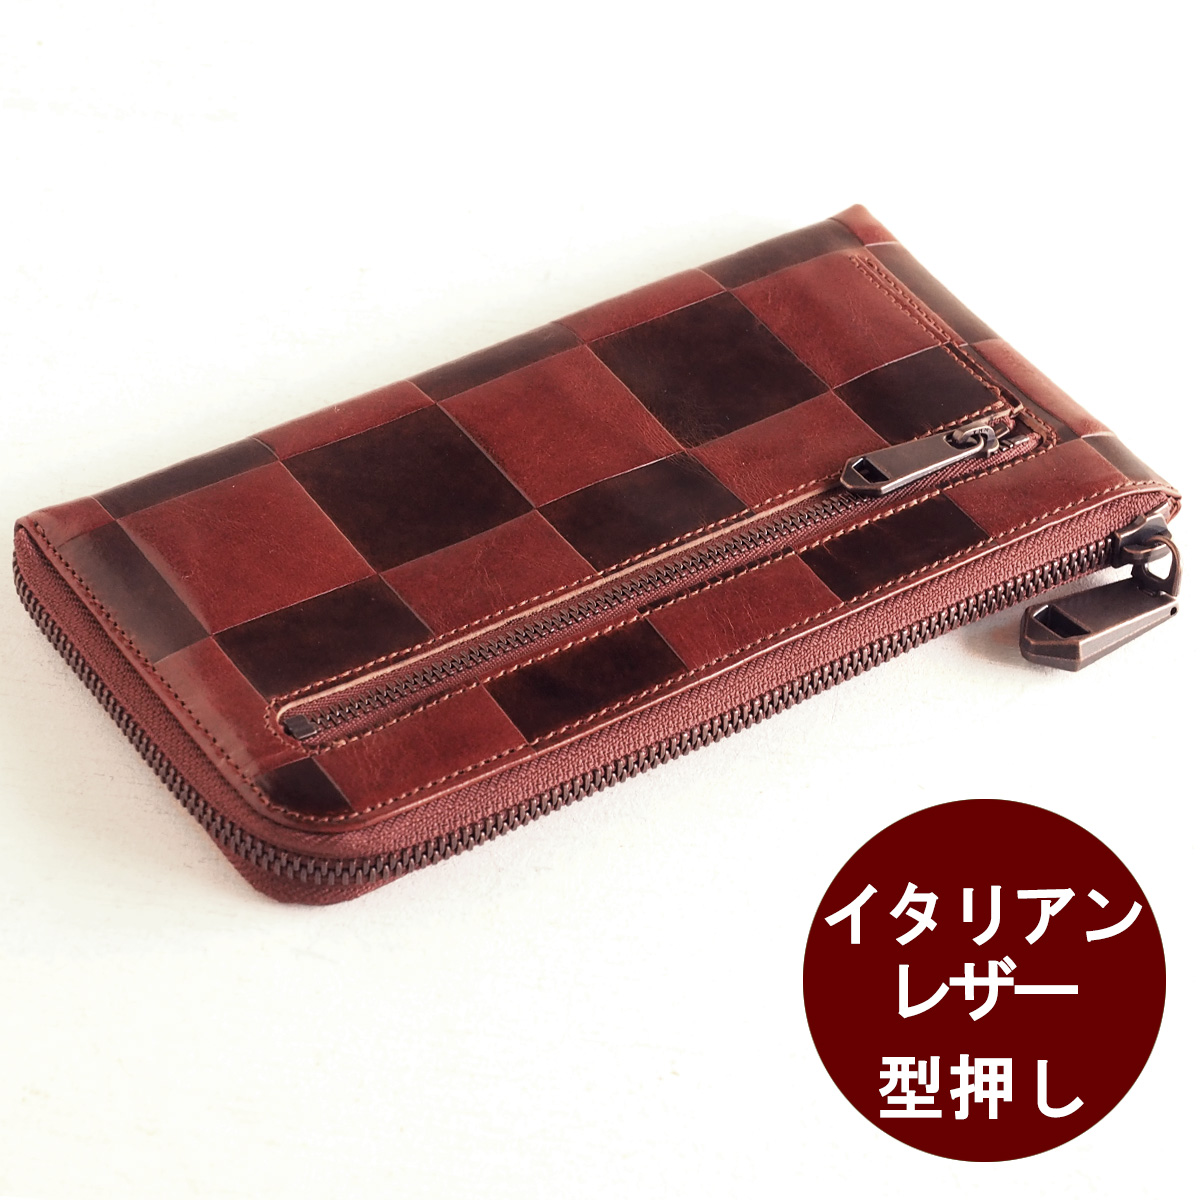 L-shaped zipper long wallet<!--nl-->Italian leather embossed block check pattern brown